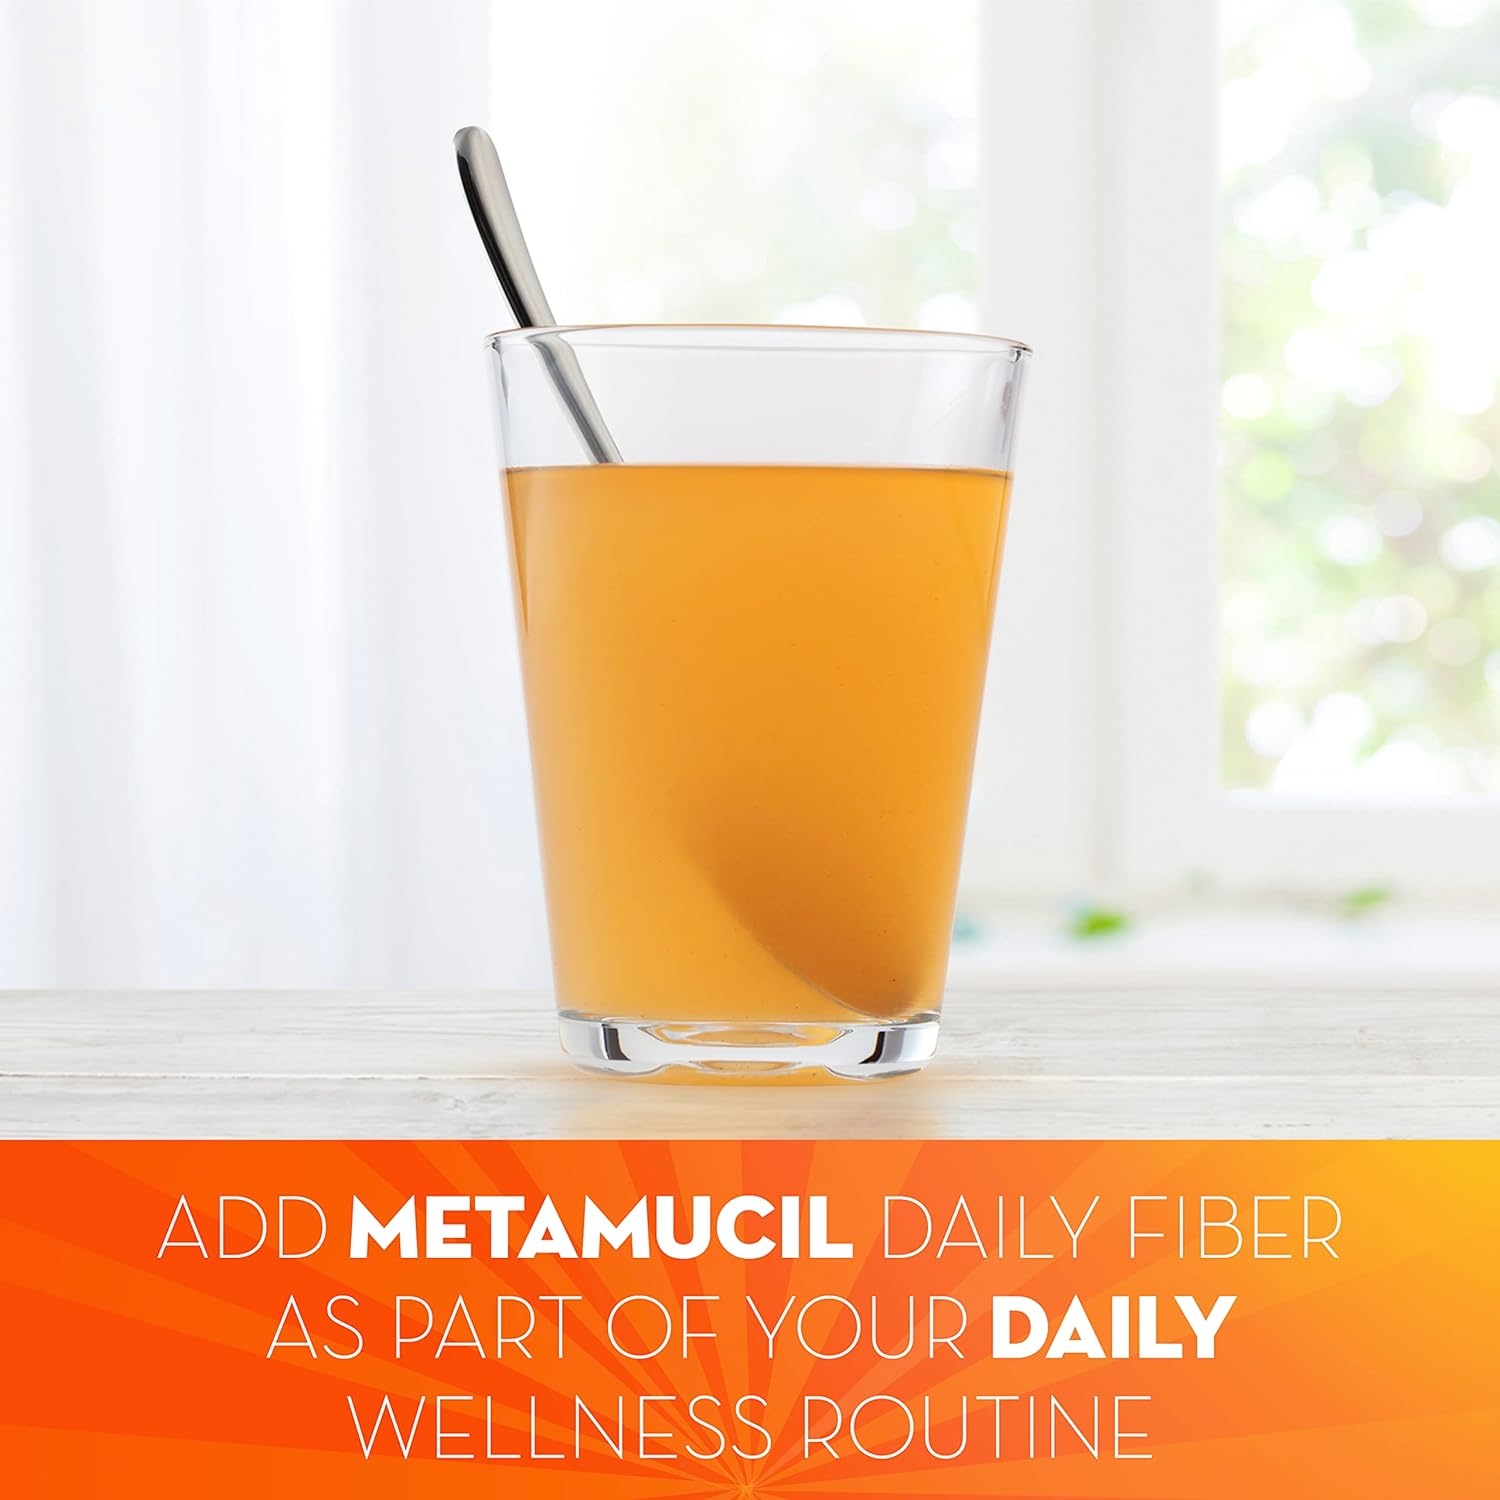 Metamucil, Daily Psyllium Husk Powder Supplement, Sugar-Free Powder, 4-in-1 Fiber for Digestive Health, Orange Flavored Drink, 180 teaspoons